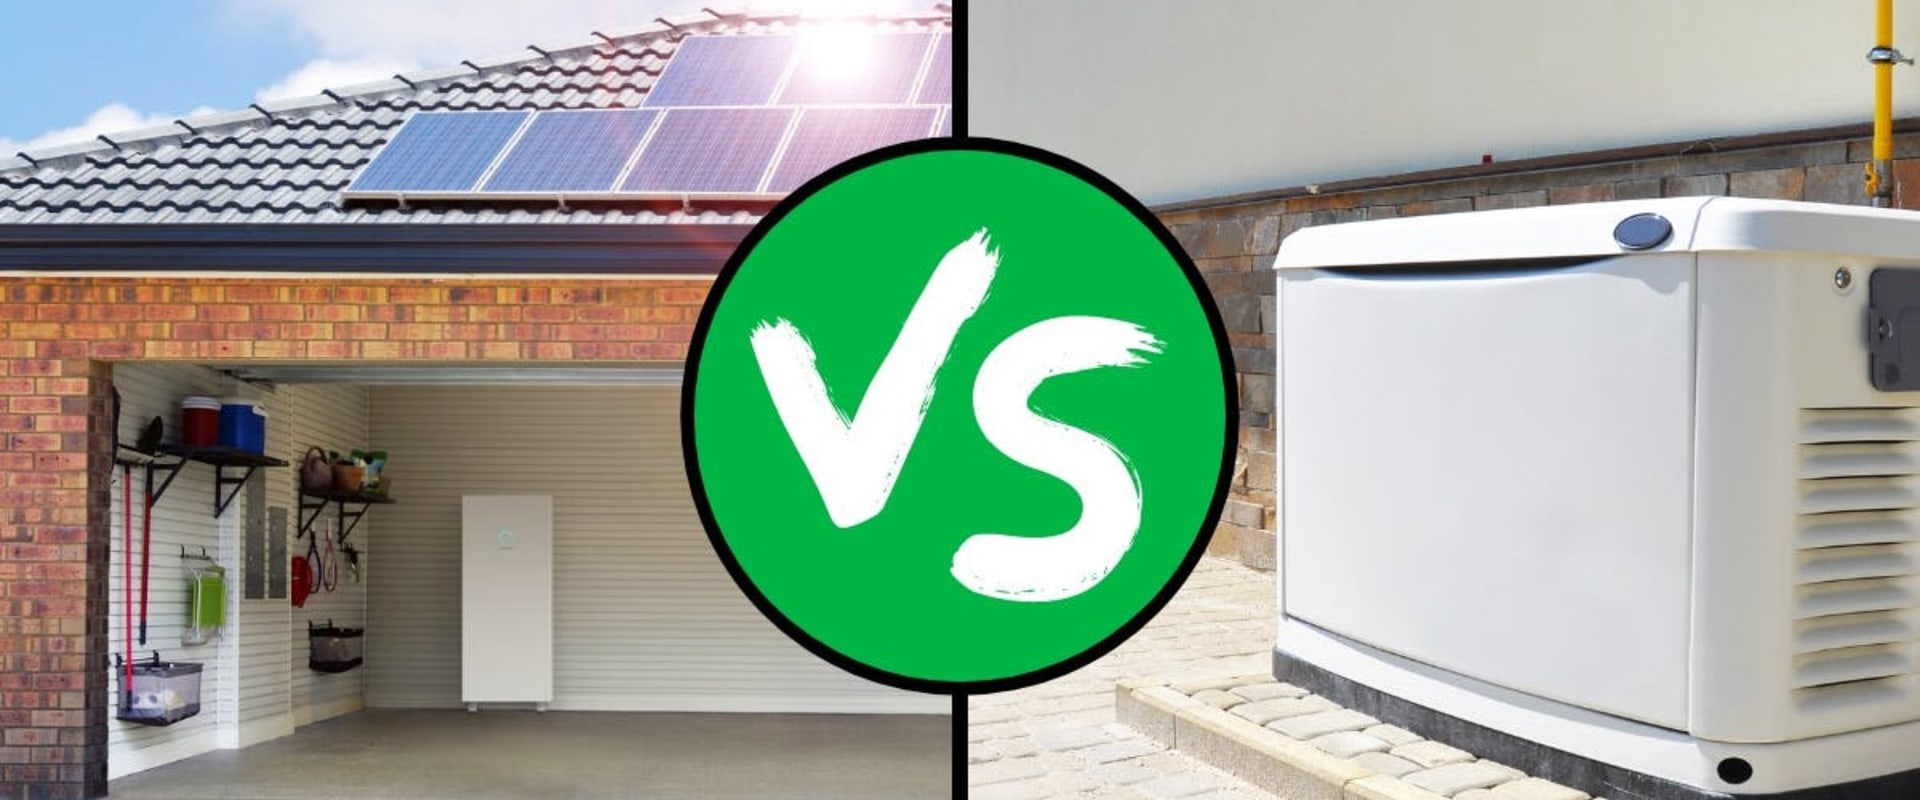 Is solar power better than a generator?